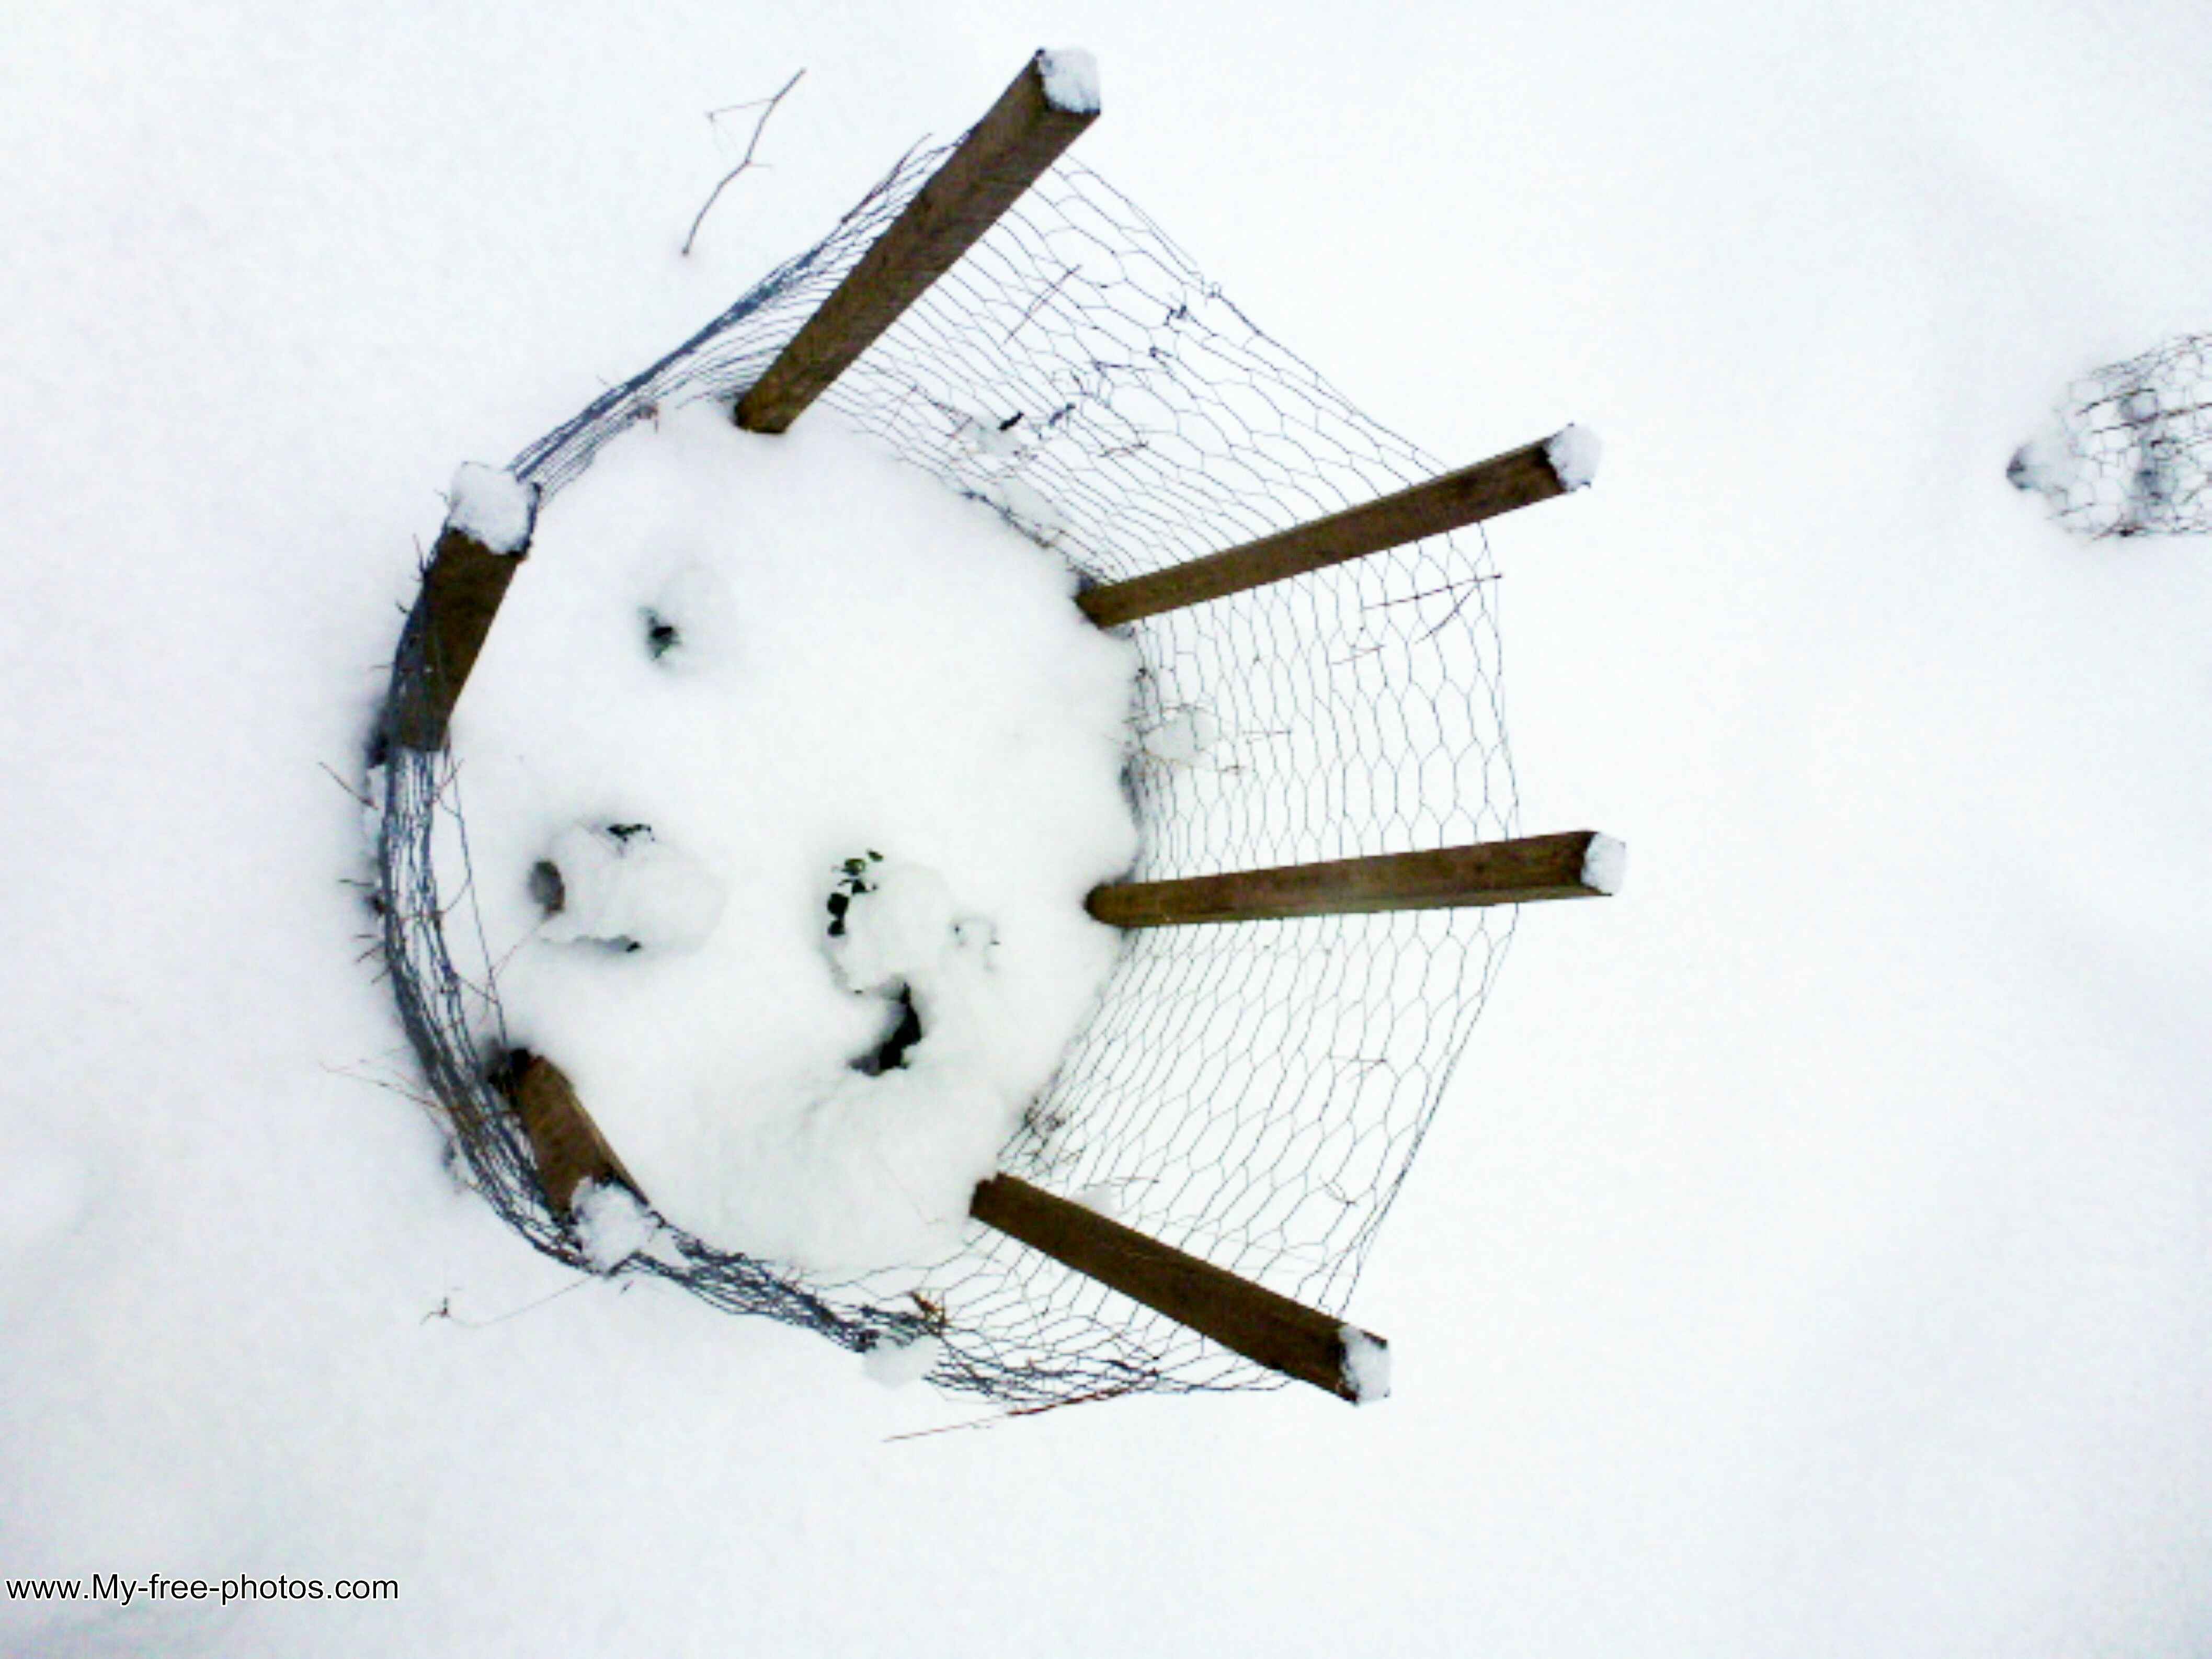 Metal Basket in the Snow